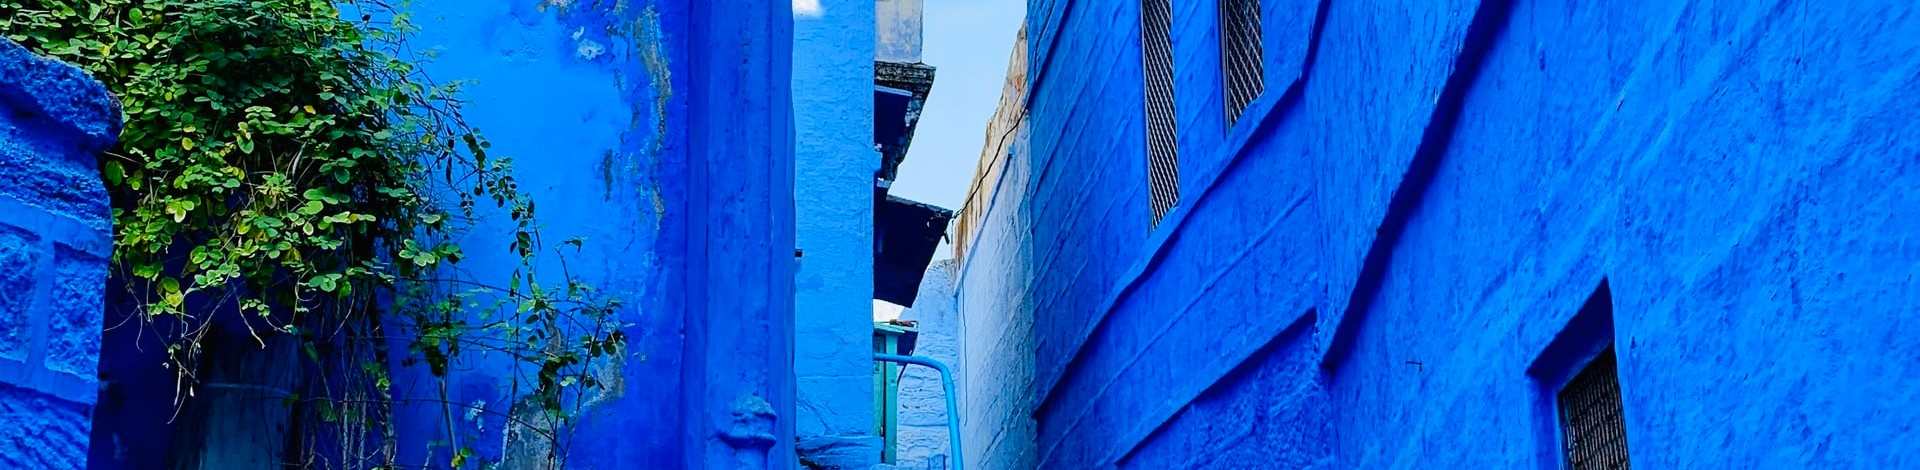 jodhpur inde rajasthan bleu rues maisons